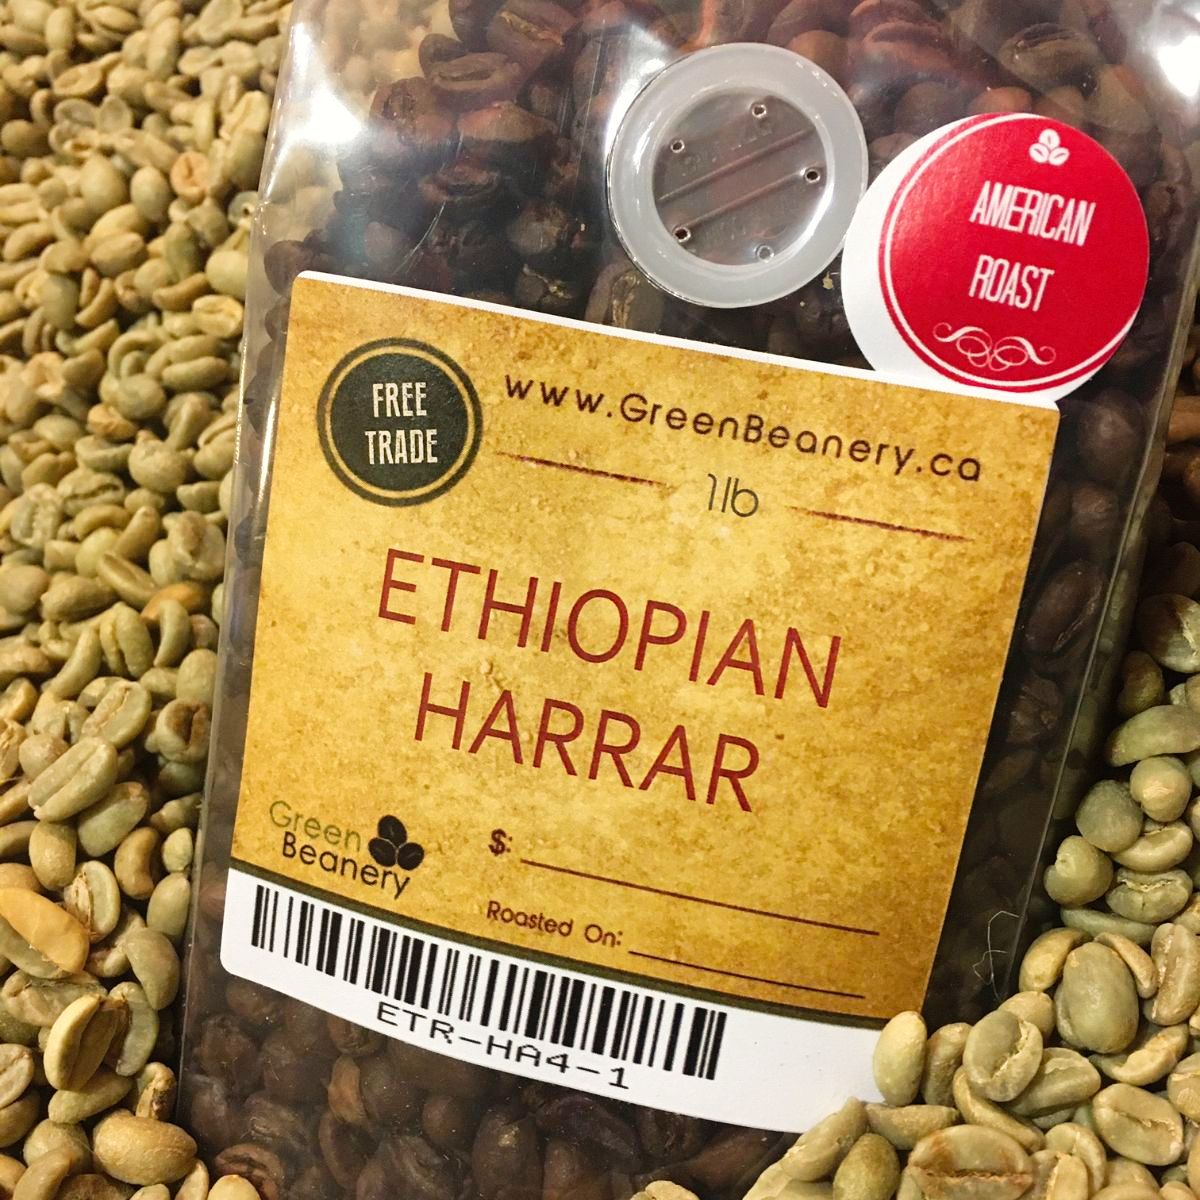 Roasted - Ethiopian Harrar GR4 (Coffee of the Week)